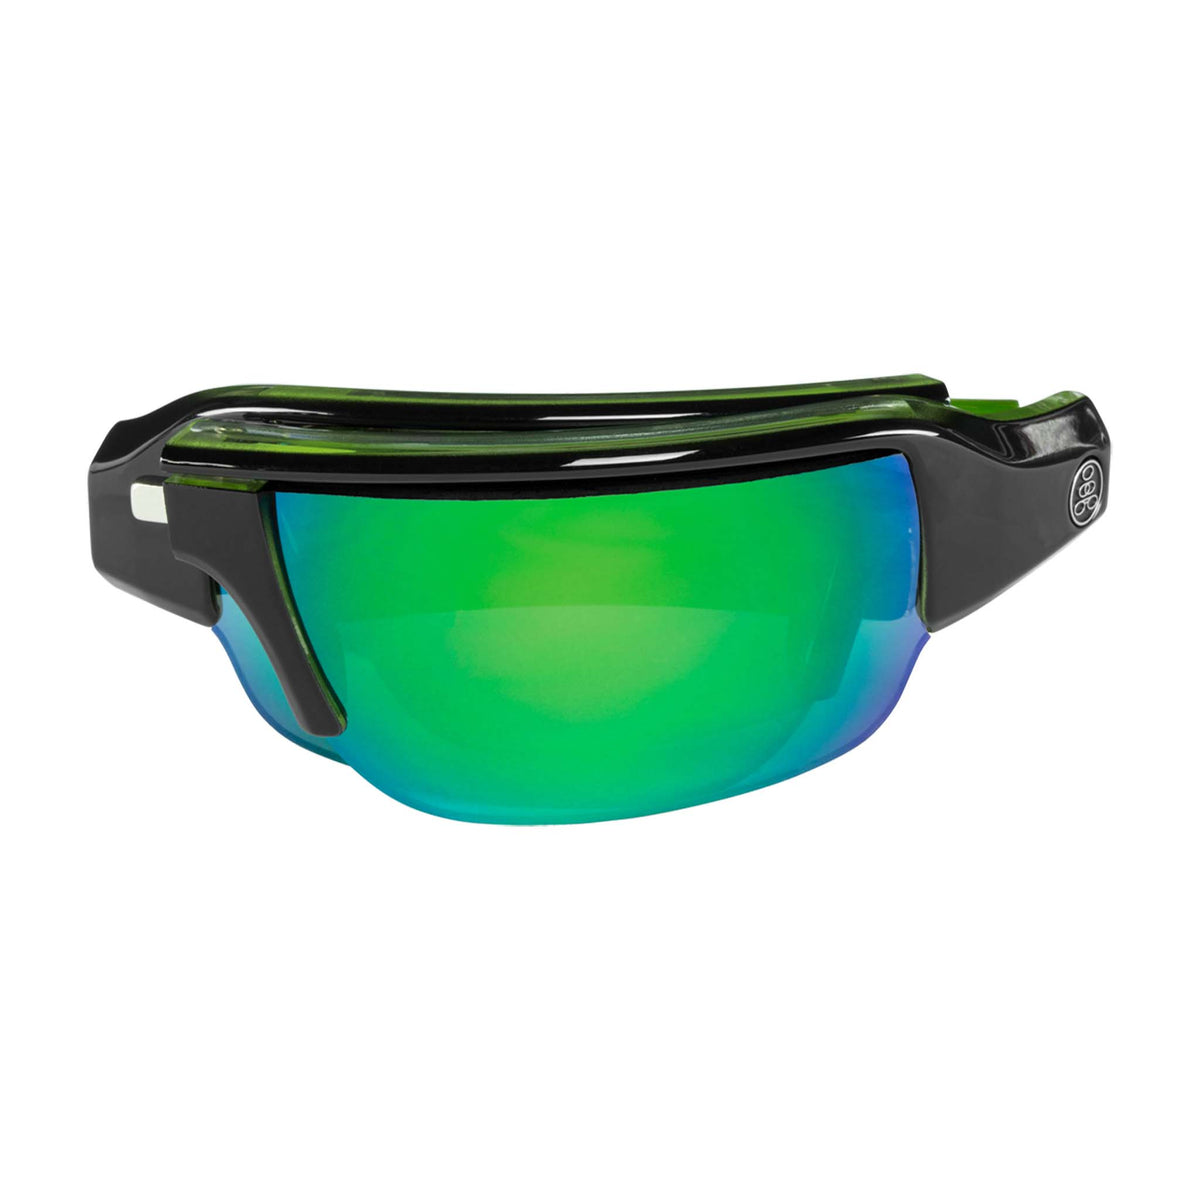 Popticals, Premium Compact Sunglasses, PopGun, 040010-GLEN, Polarized Sunglasses, Gloss Black over Green Crystal Frame, Gray Lenses w/Green Mirror Finish, Compact View